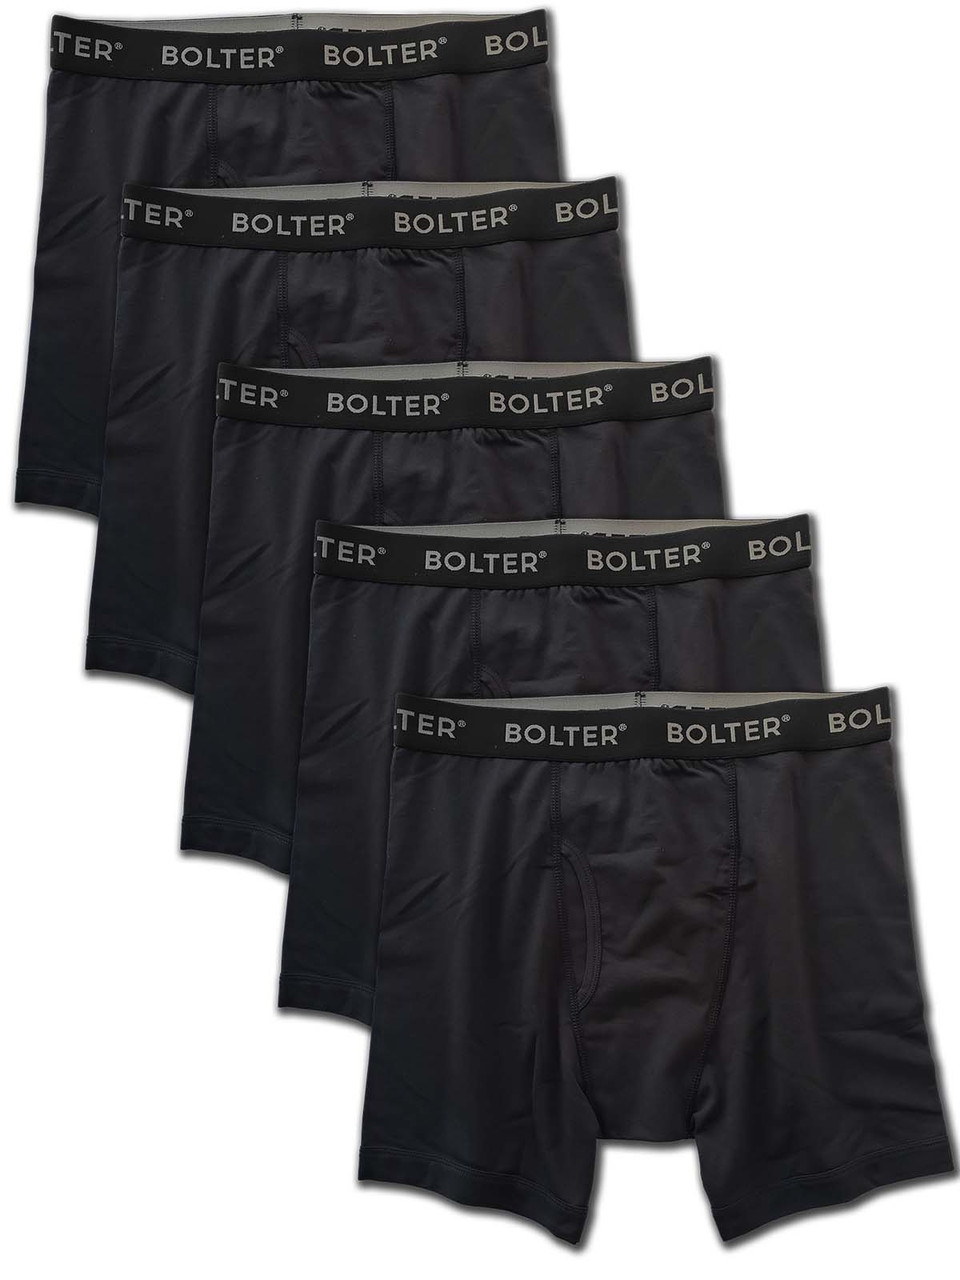 Woxer Black Boxer Brief Spandex 5” Women's Size XX-Large NEW - beyond  exchange